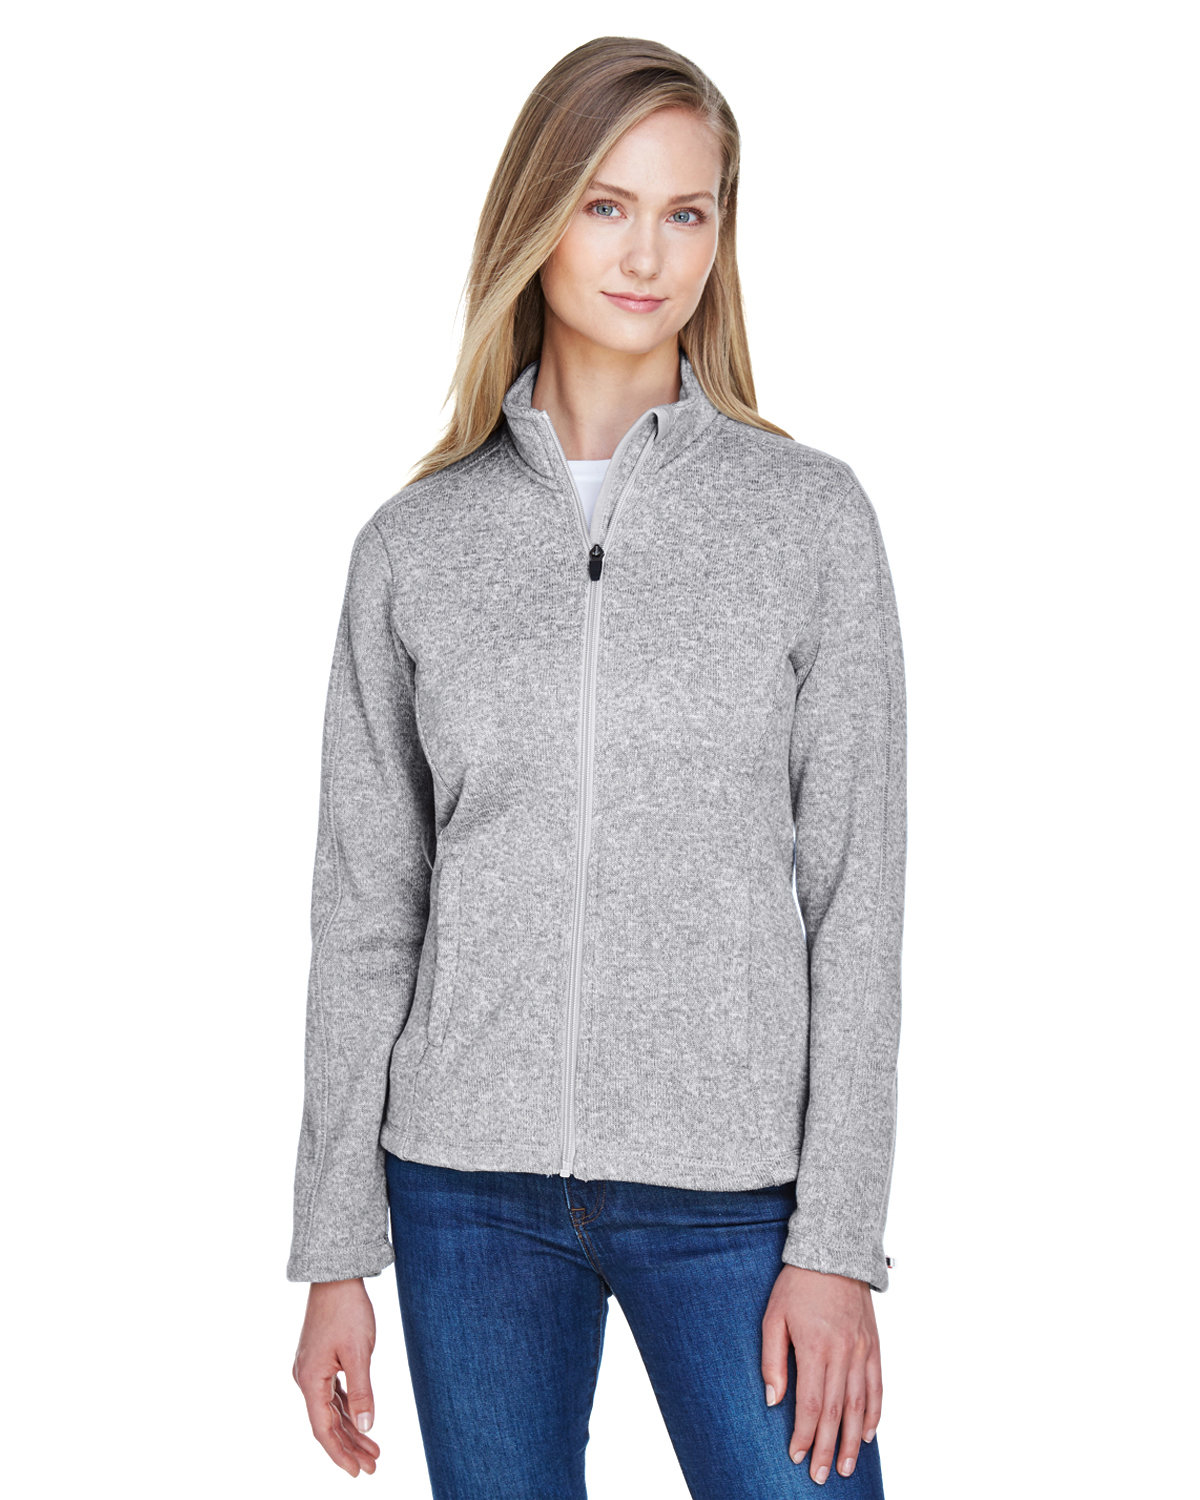 100% Heavy Cotton Womens Fleece Full-Zip Hoodie Jacket Made in Canada